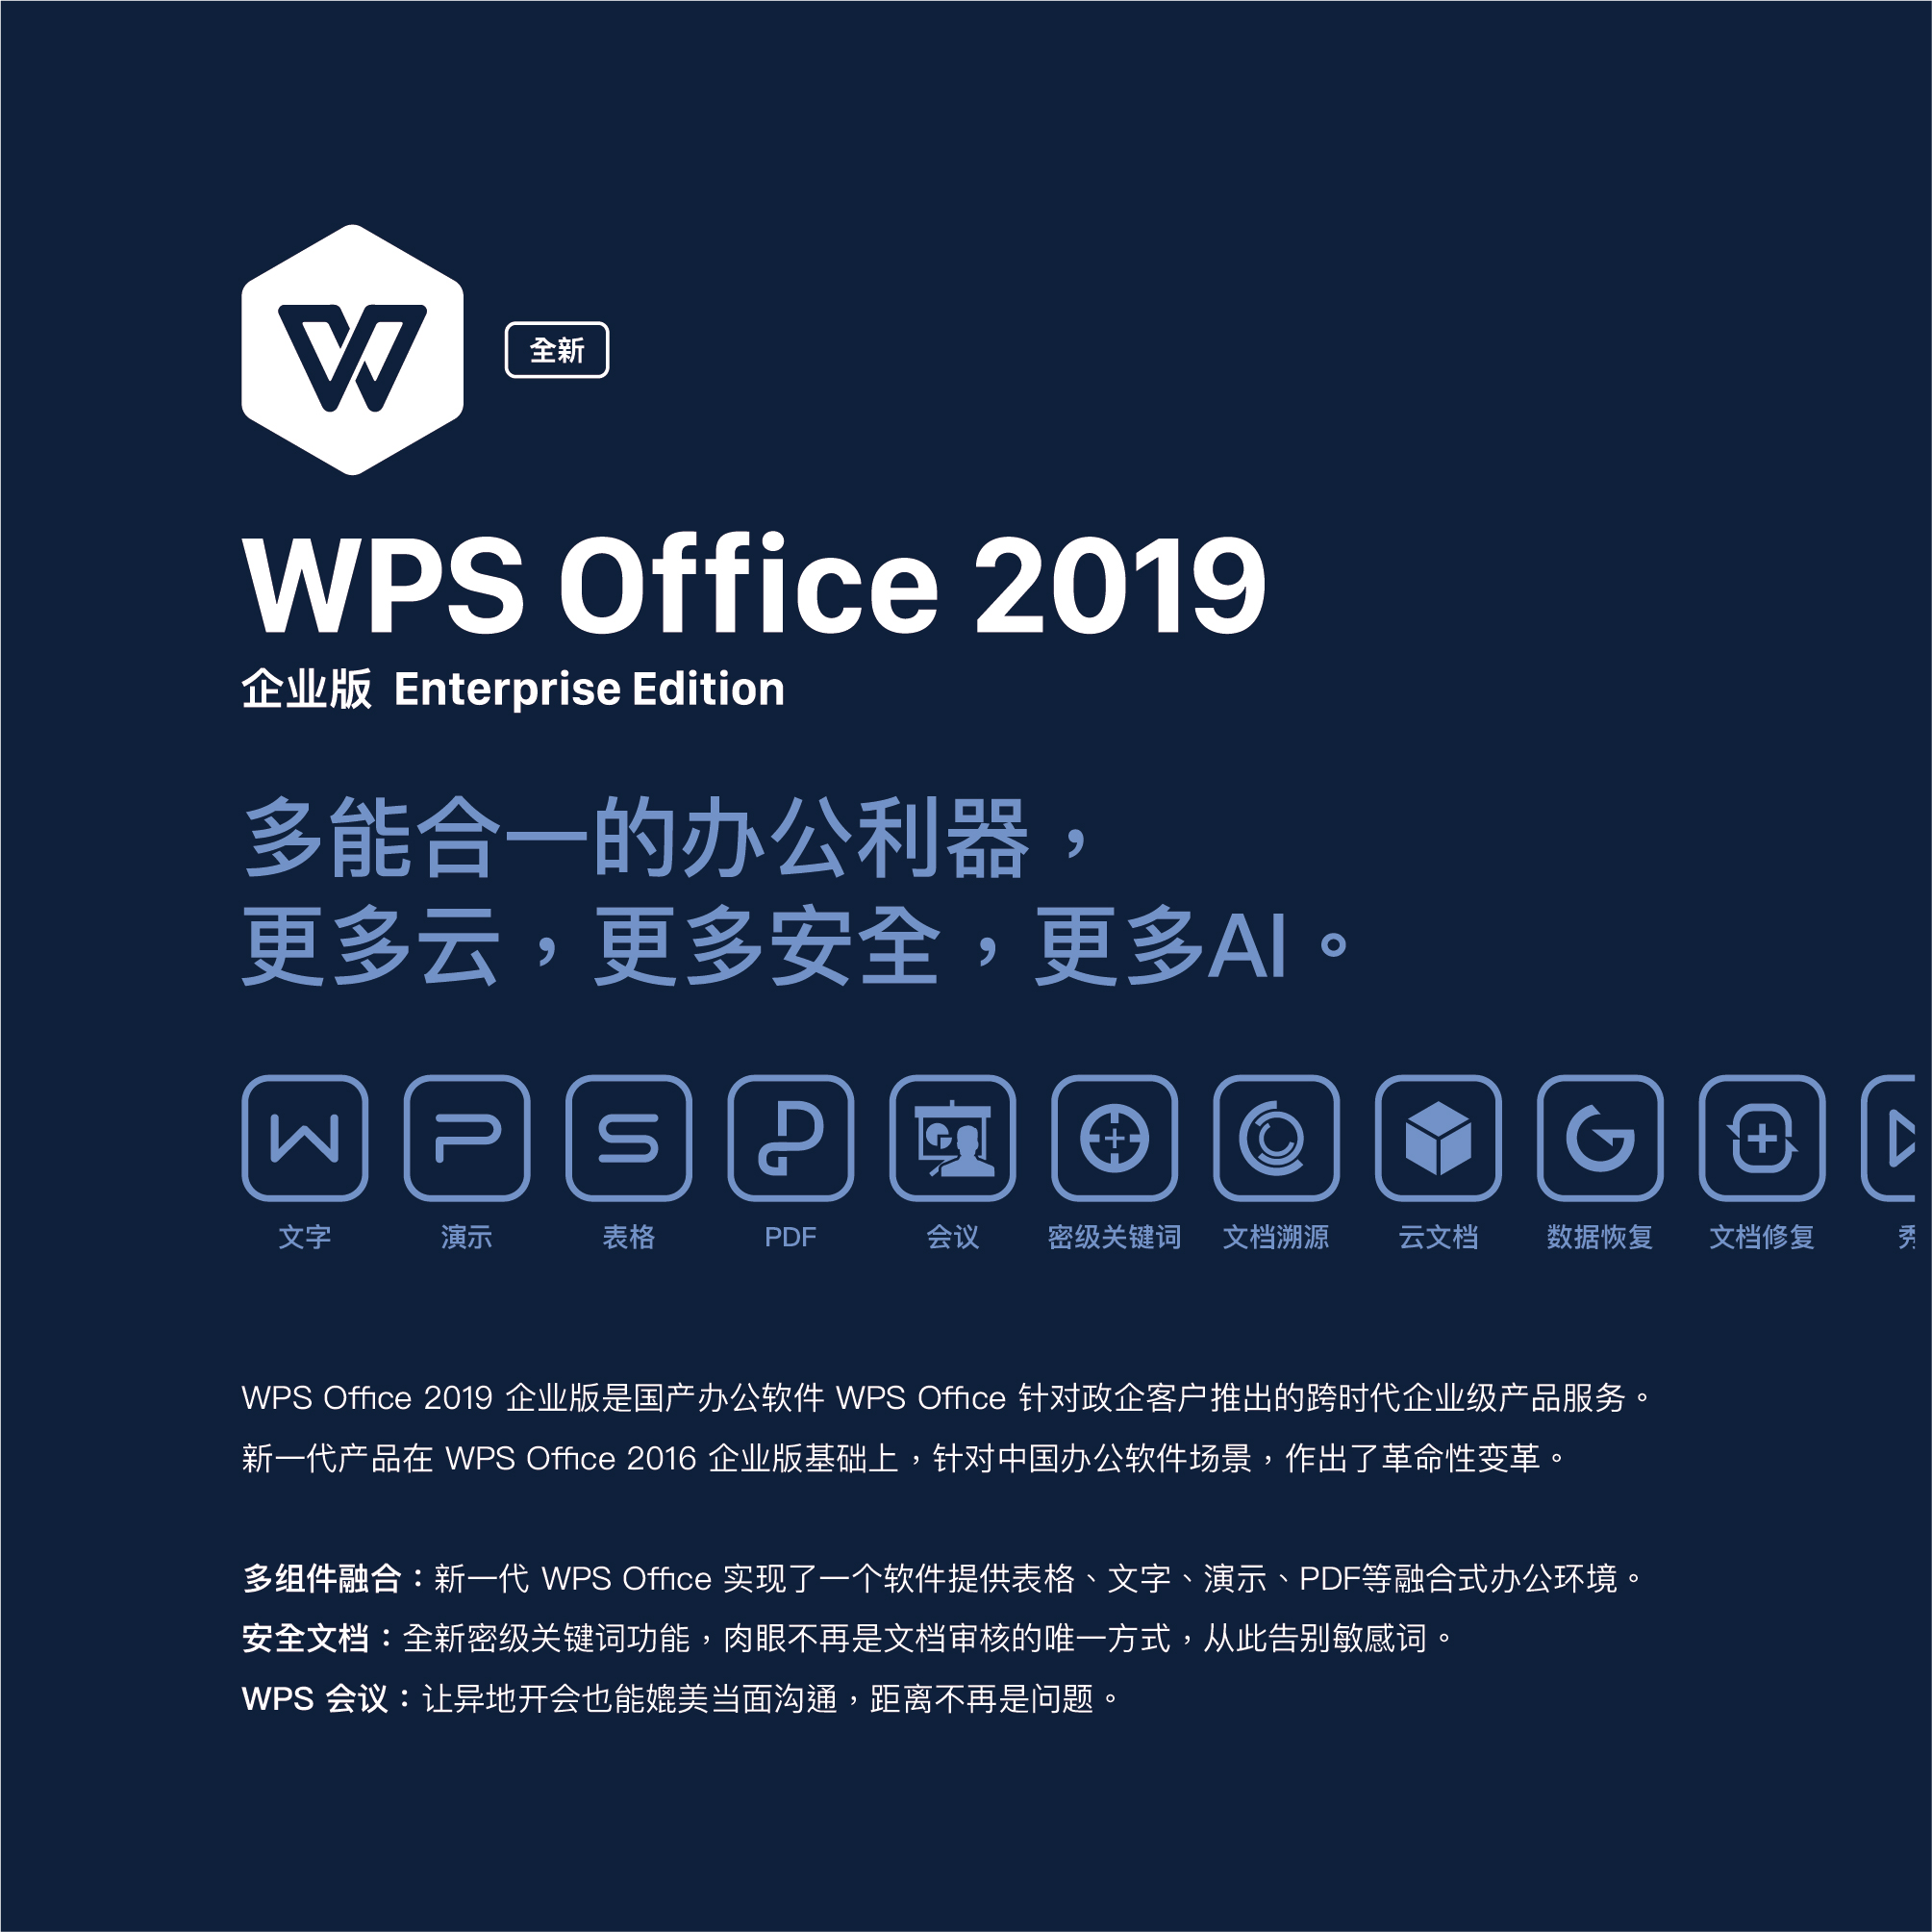 wps office 2019企业版全面升级 新功能引人注目